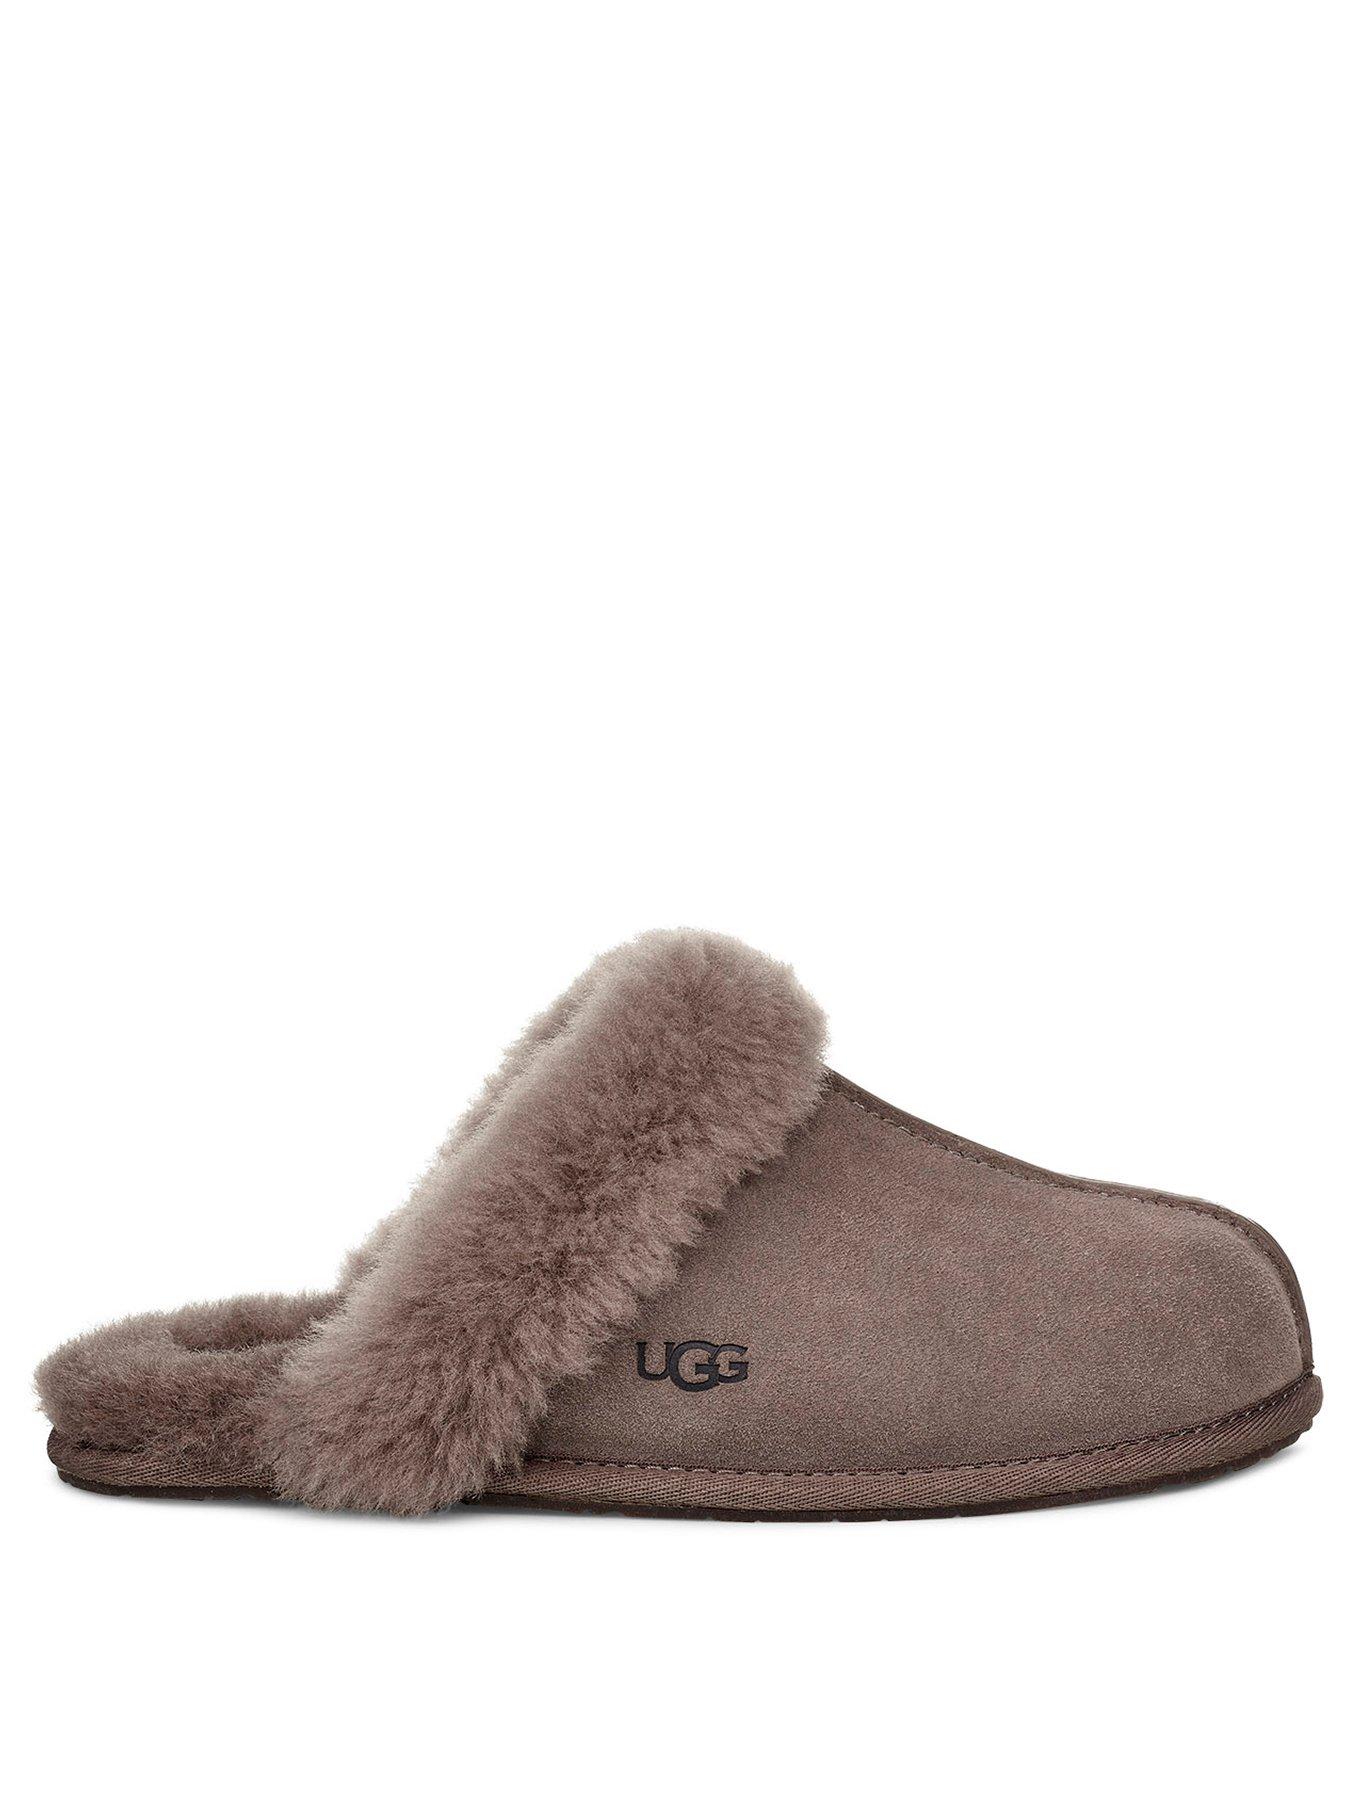 buy ugg slippers uk